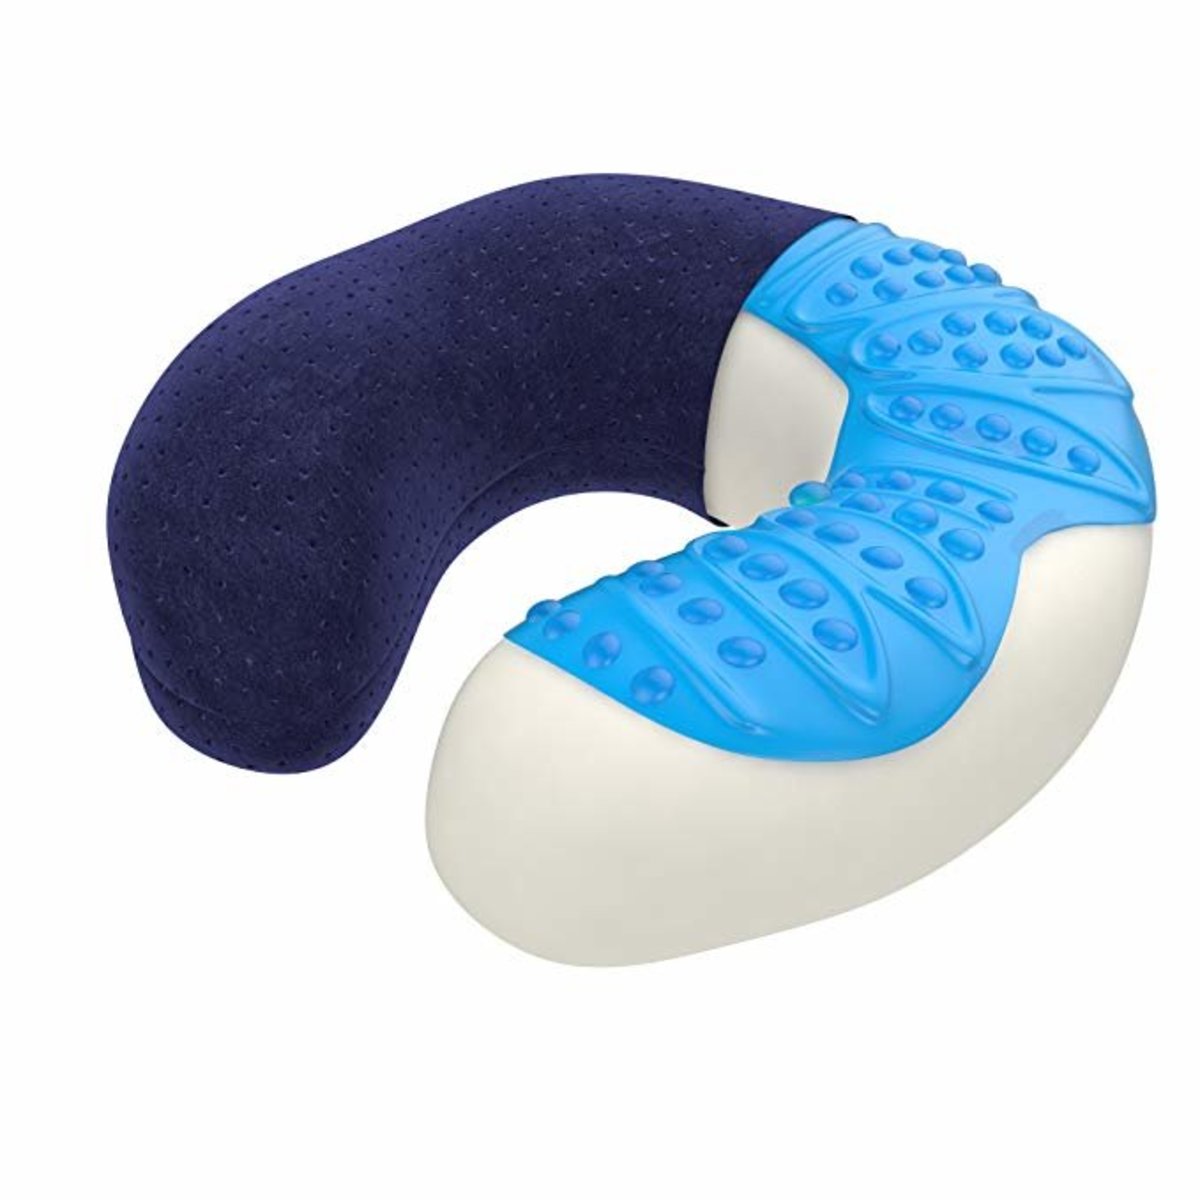 Bluebeach Memory Foam Neck Support Cooling Gel Travel Pillow